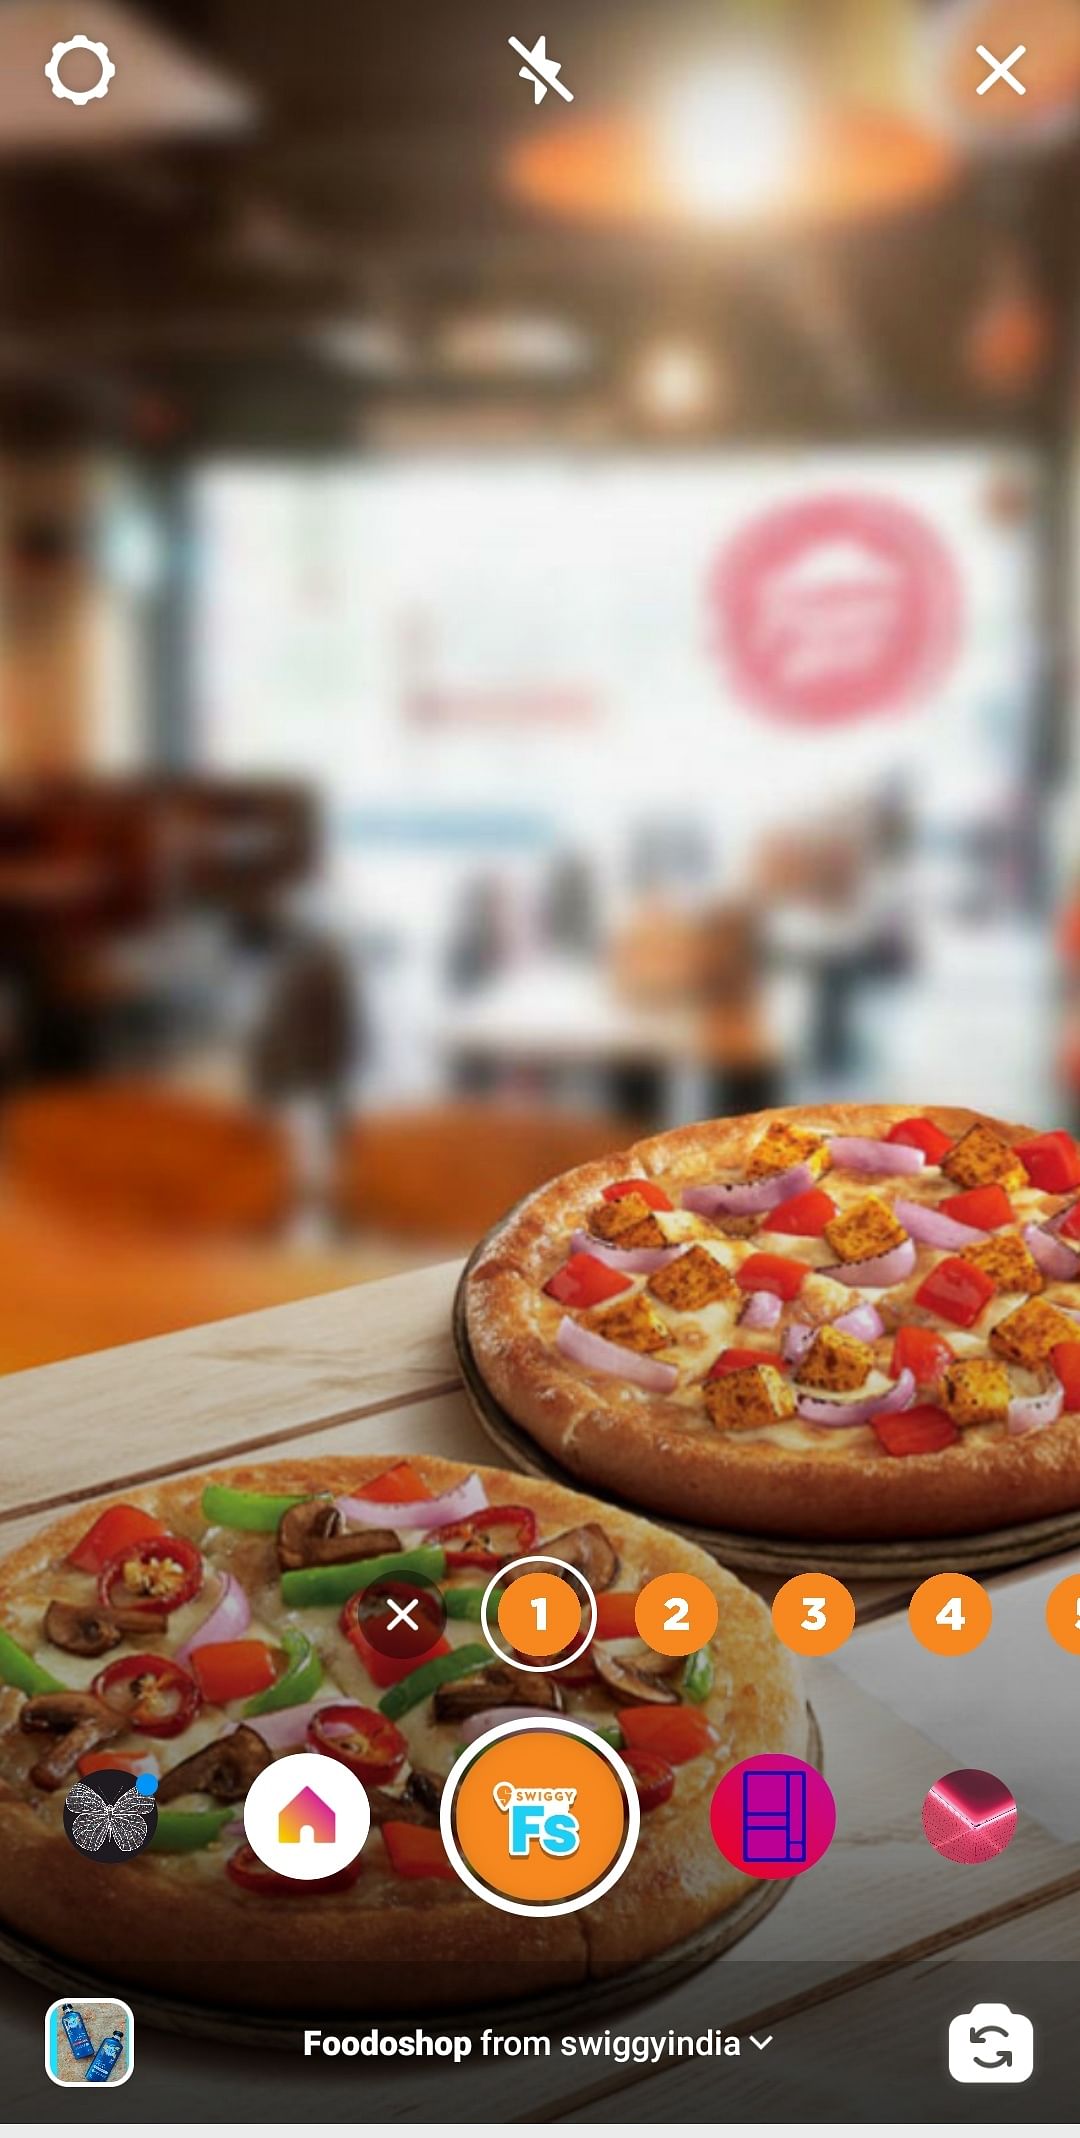 Swiggy introduces 'Foodoshop' campaign via an Instagram AR lens